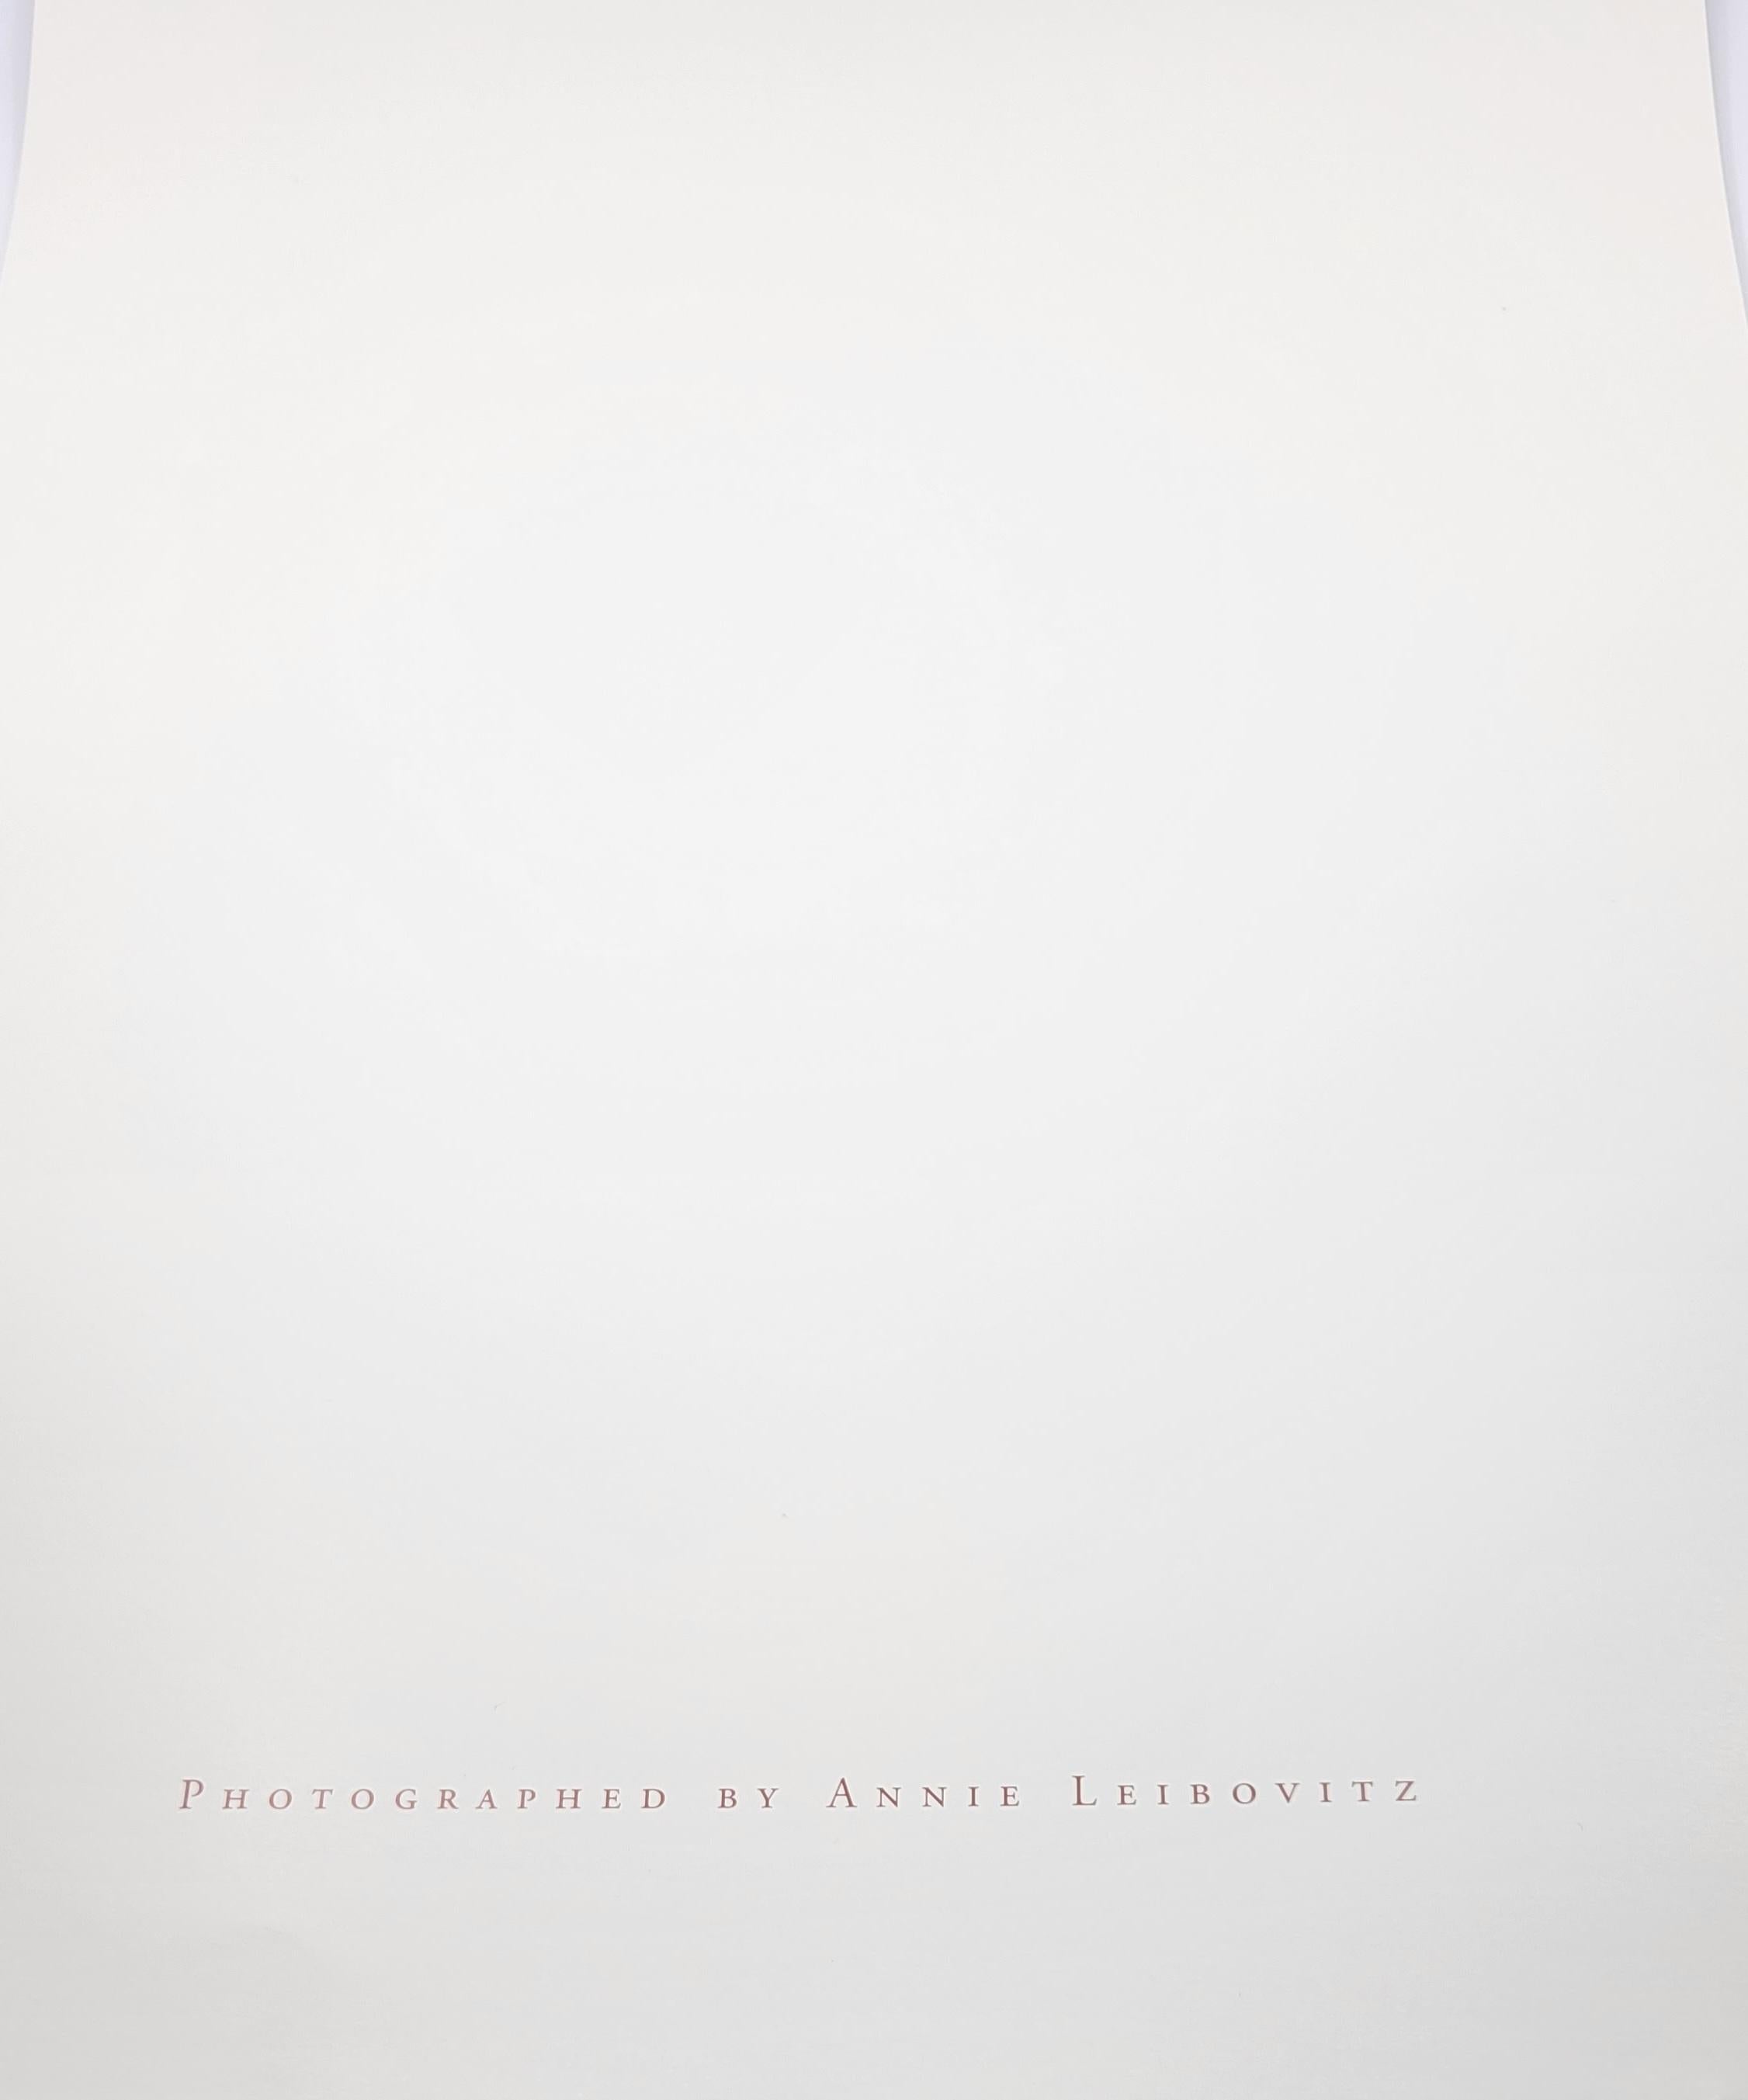 American Calendrier Pirelli , Photographies de Anna Leibovitz Année 2000 For Sale